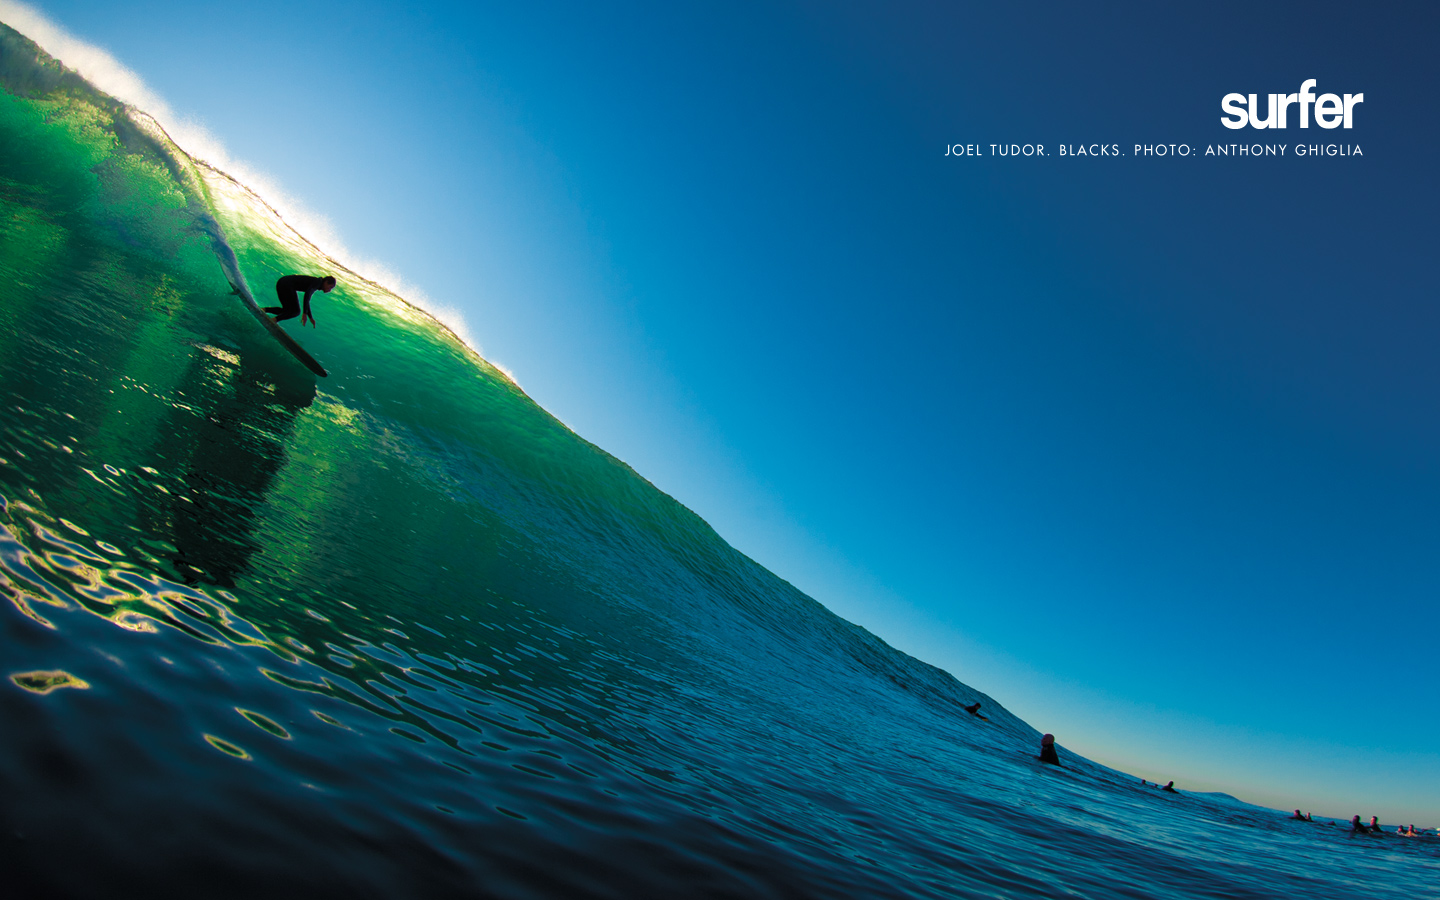 Joel Tudor, Blacks. Photo: Anthony Ghiglia #surferphotos #surfer ...